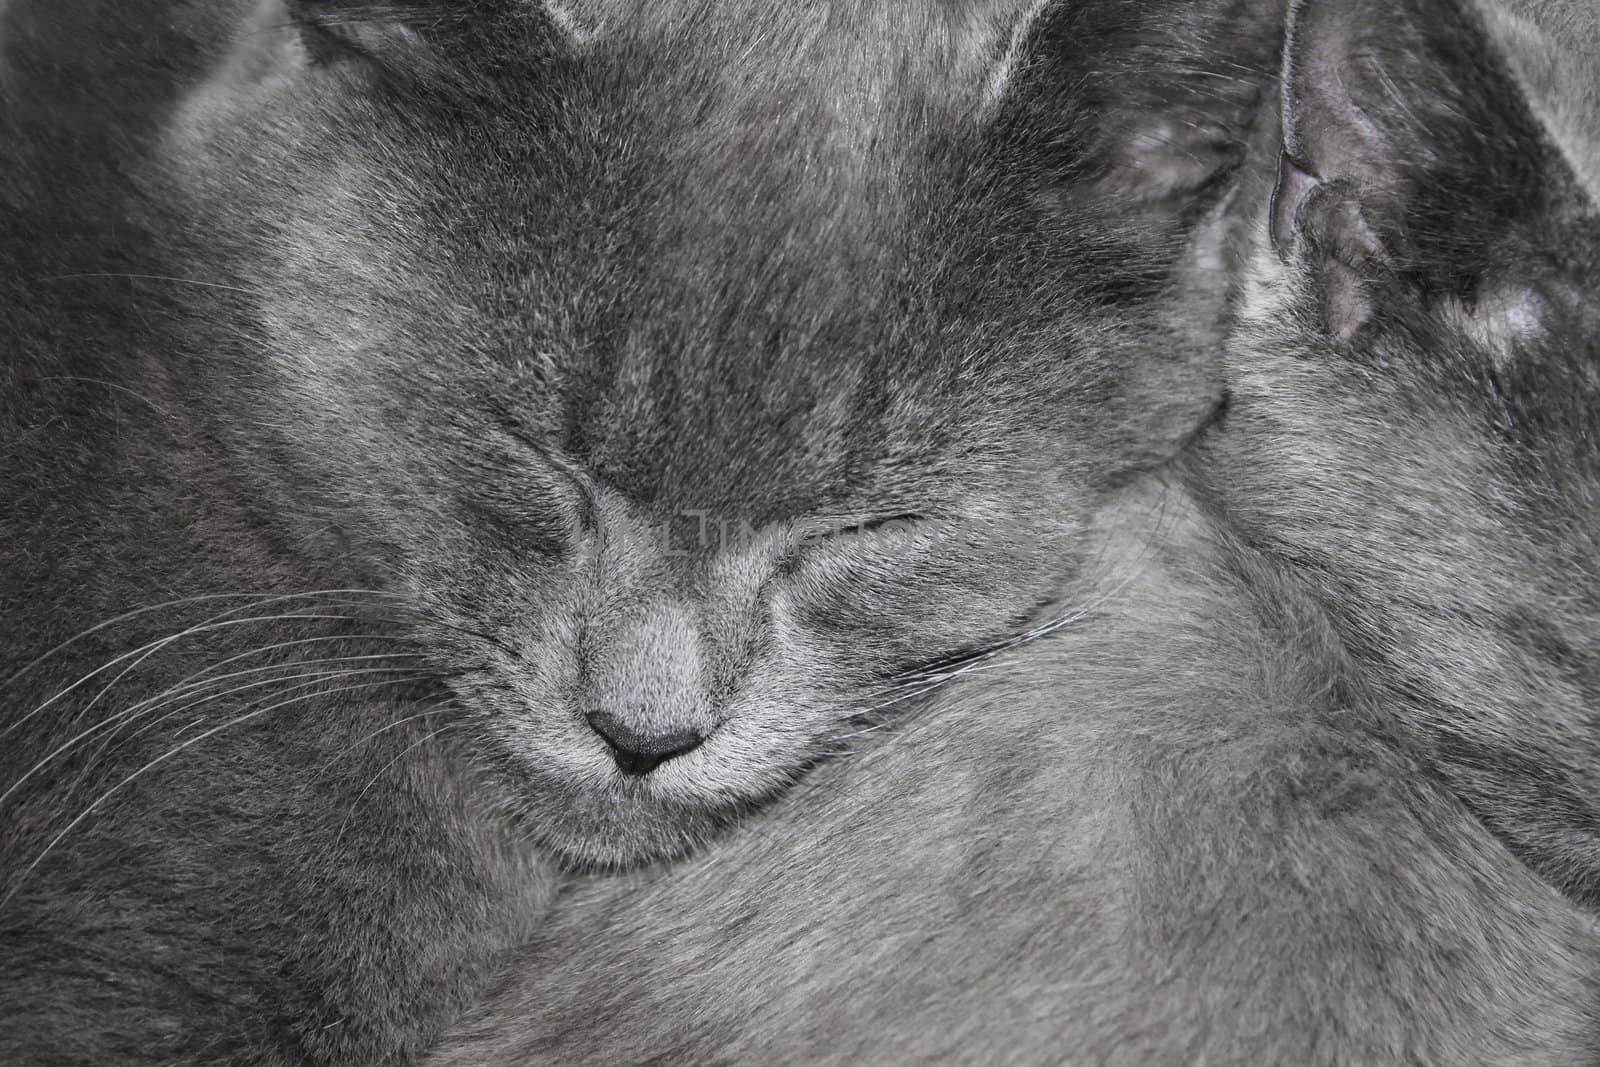 Gray British cats are sleeping. Close up